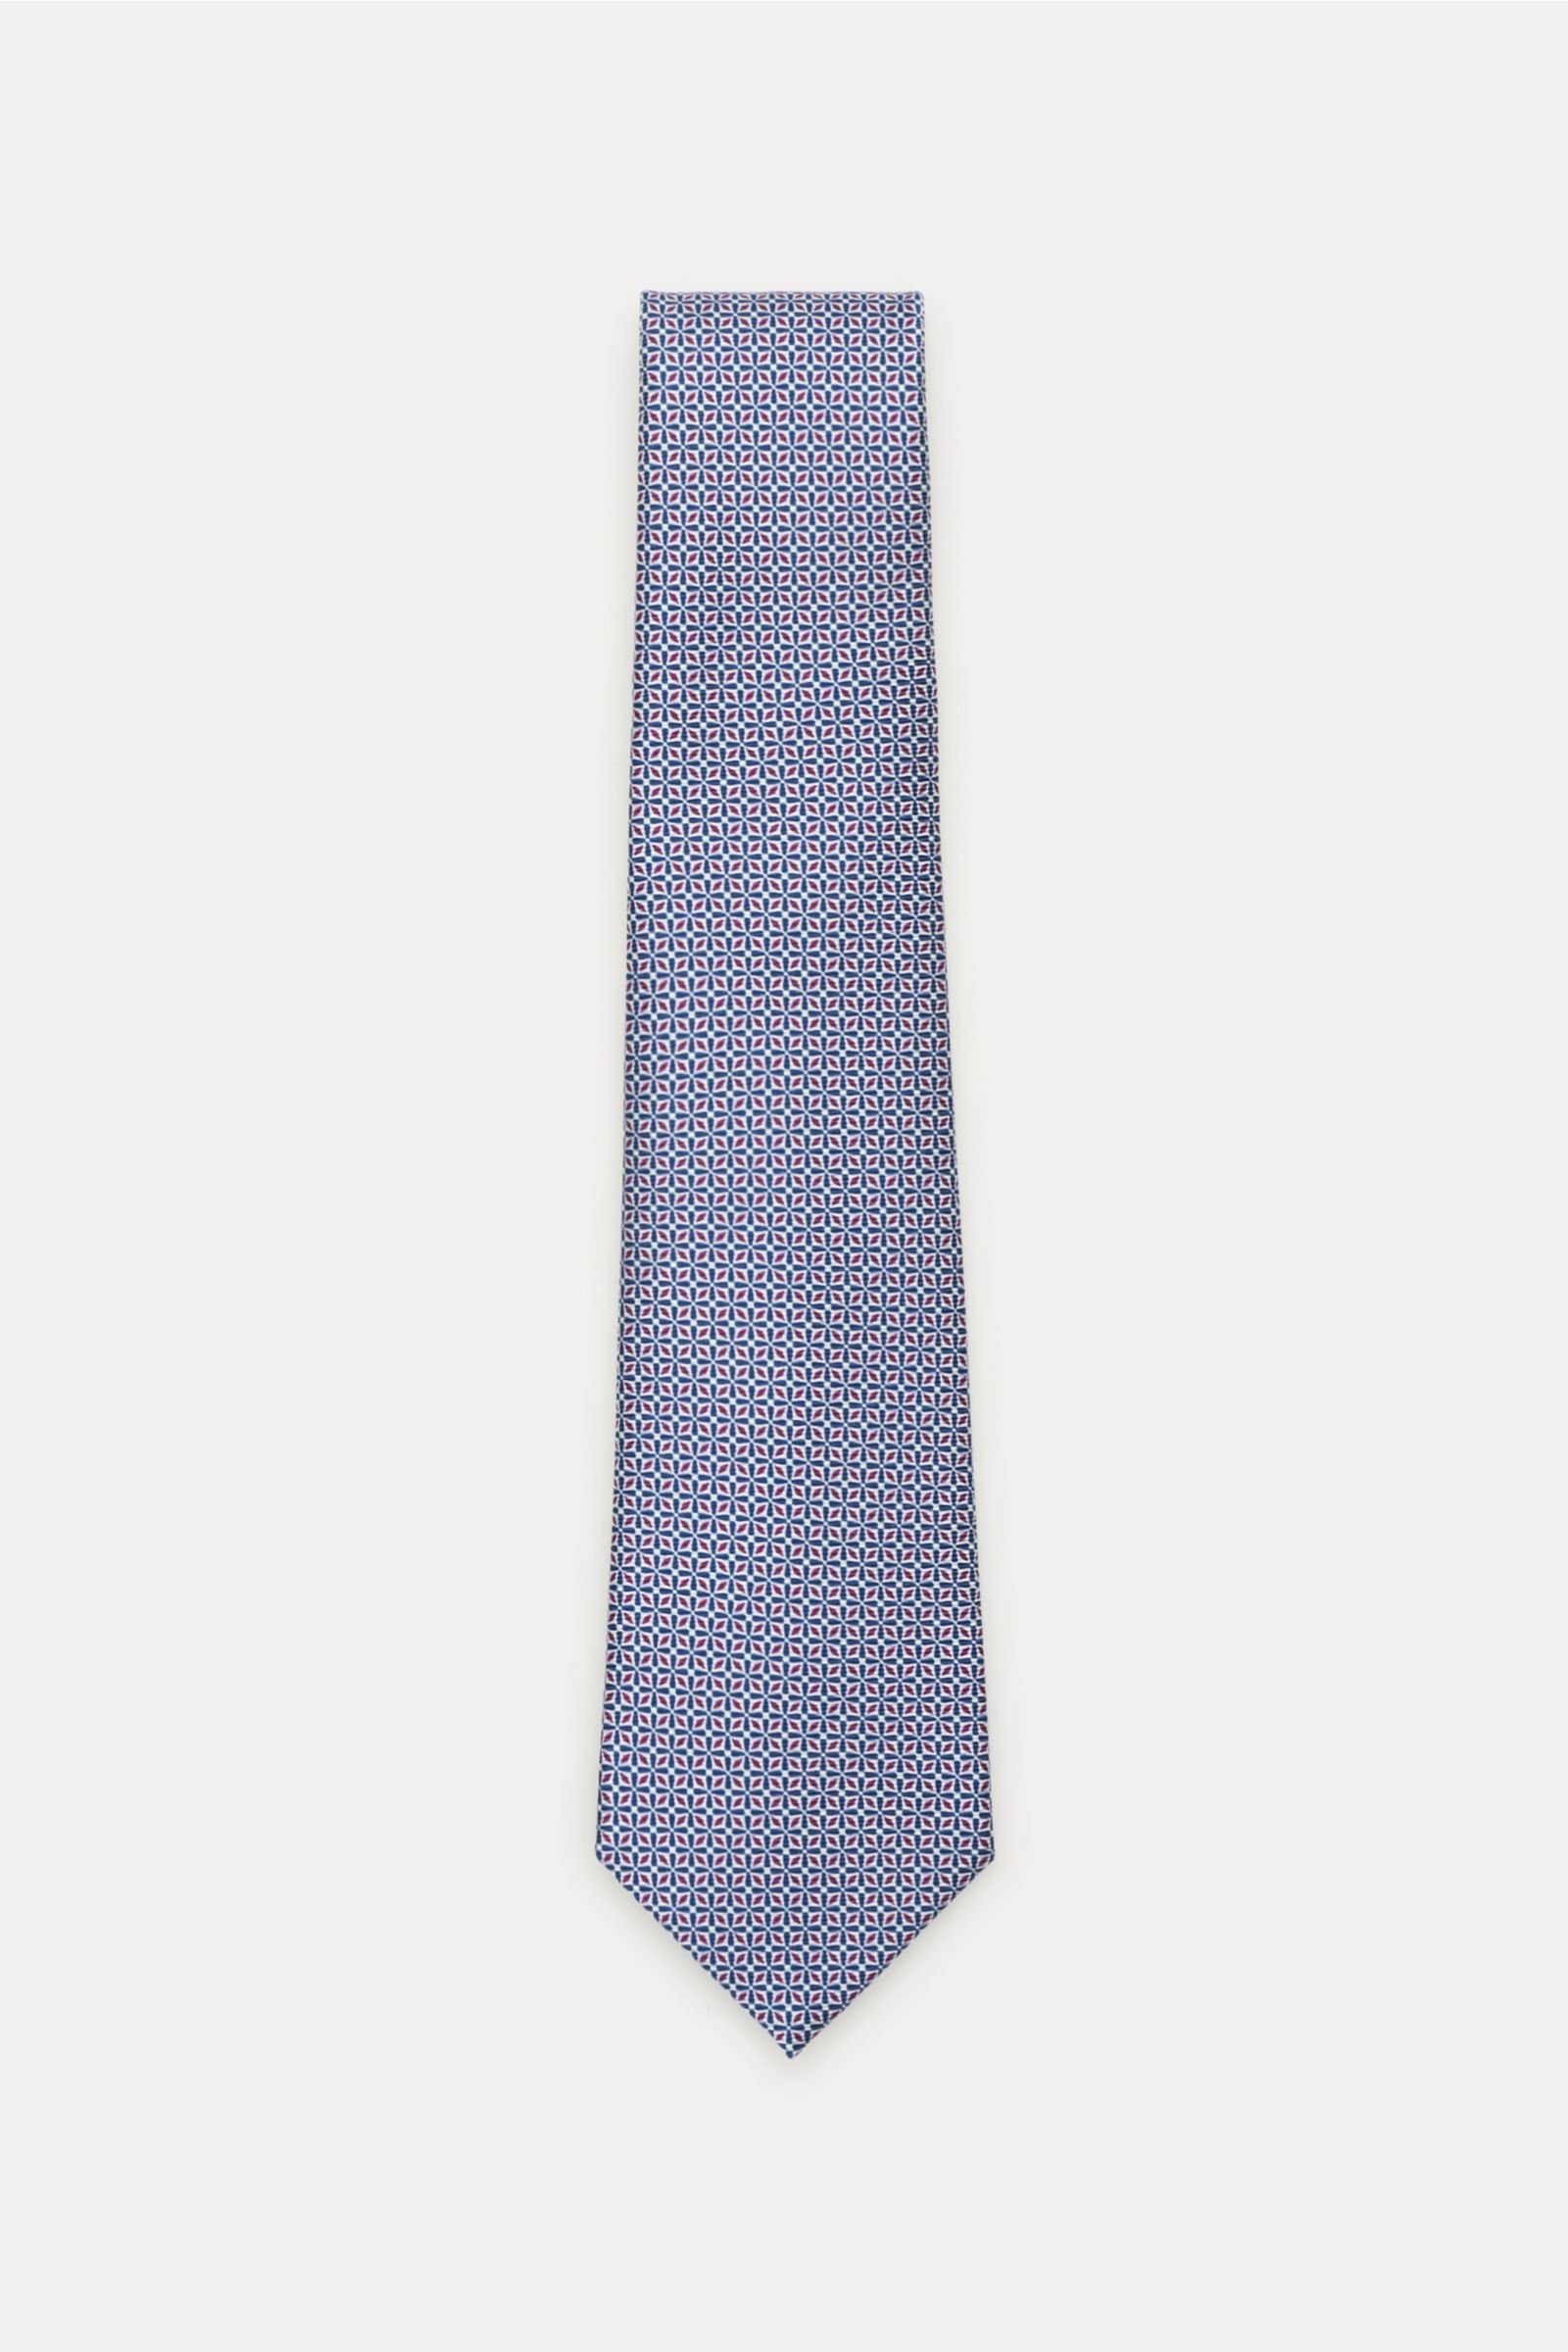 Silk tie dark blue/violet patterned